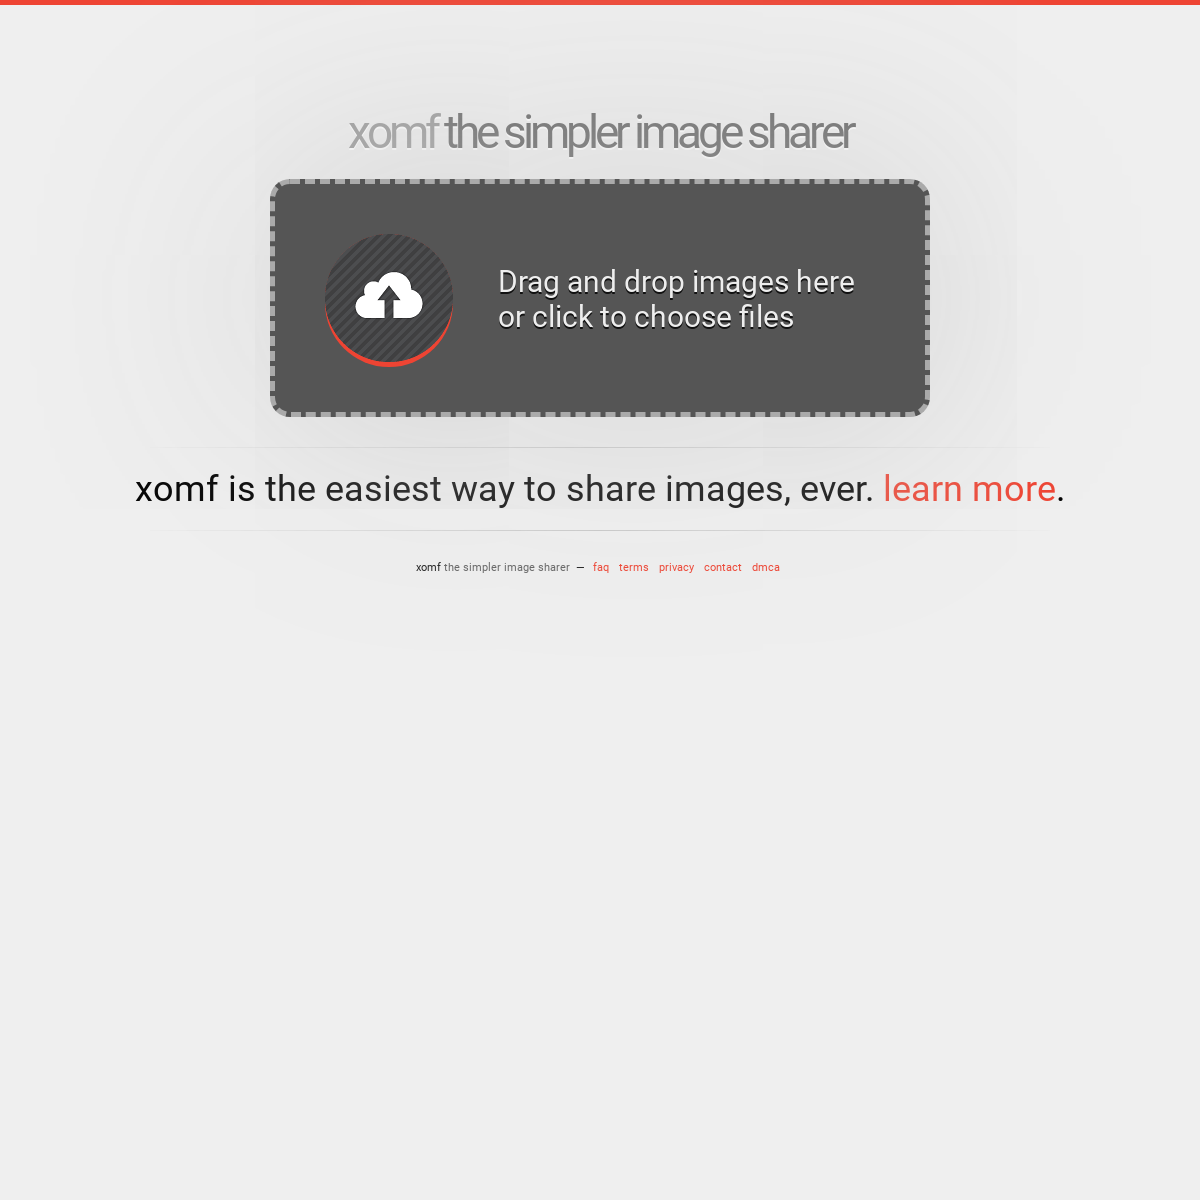 xomf - the simpler image sharer